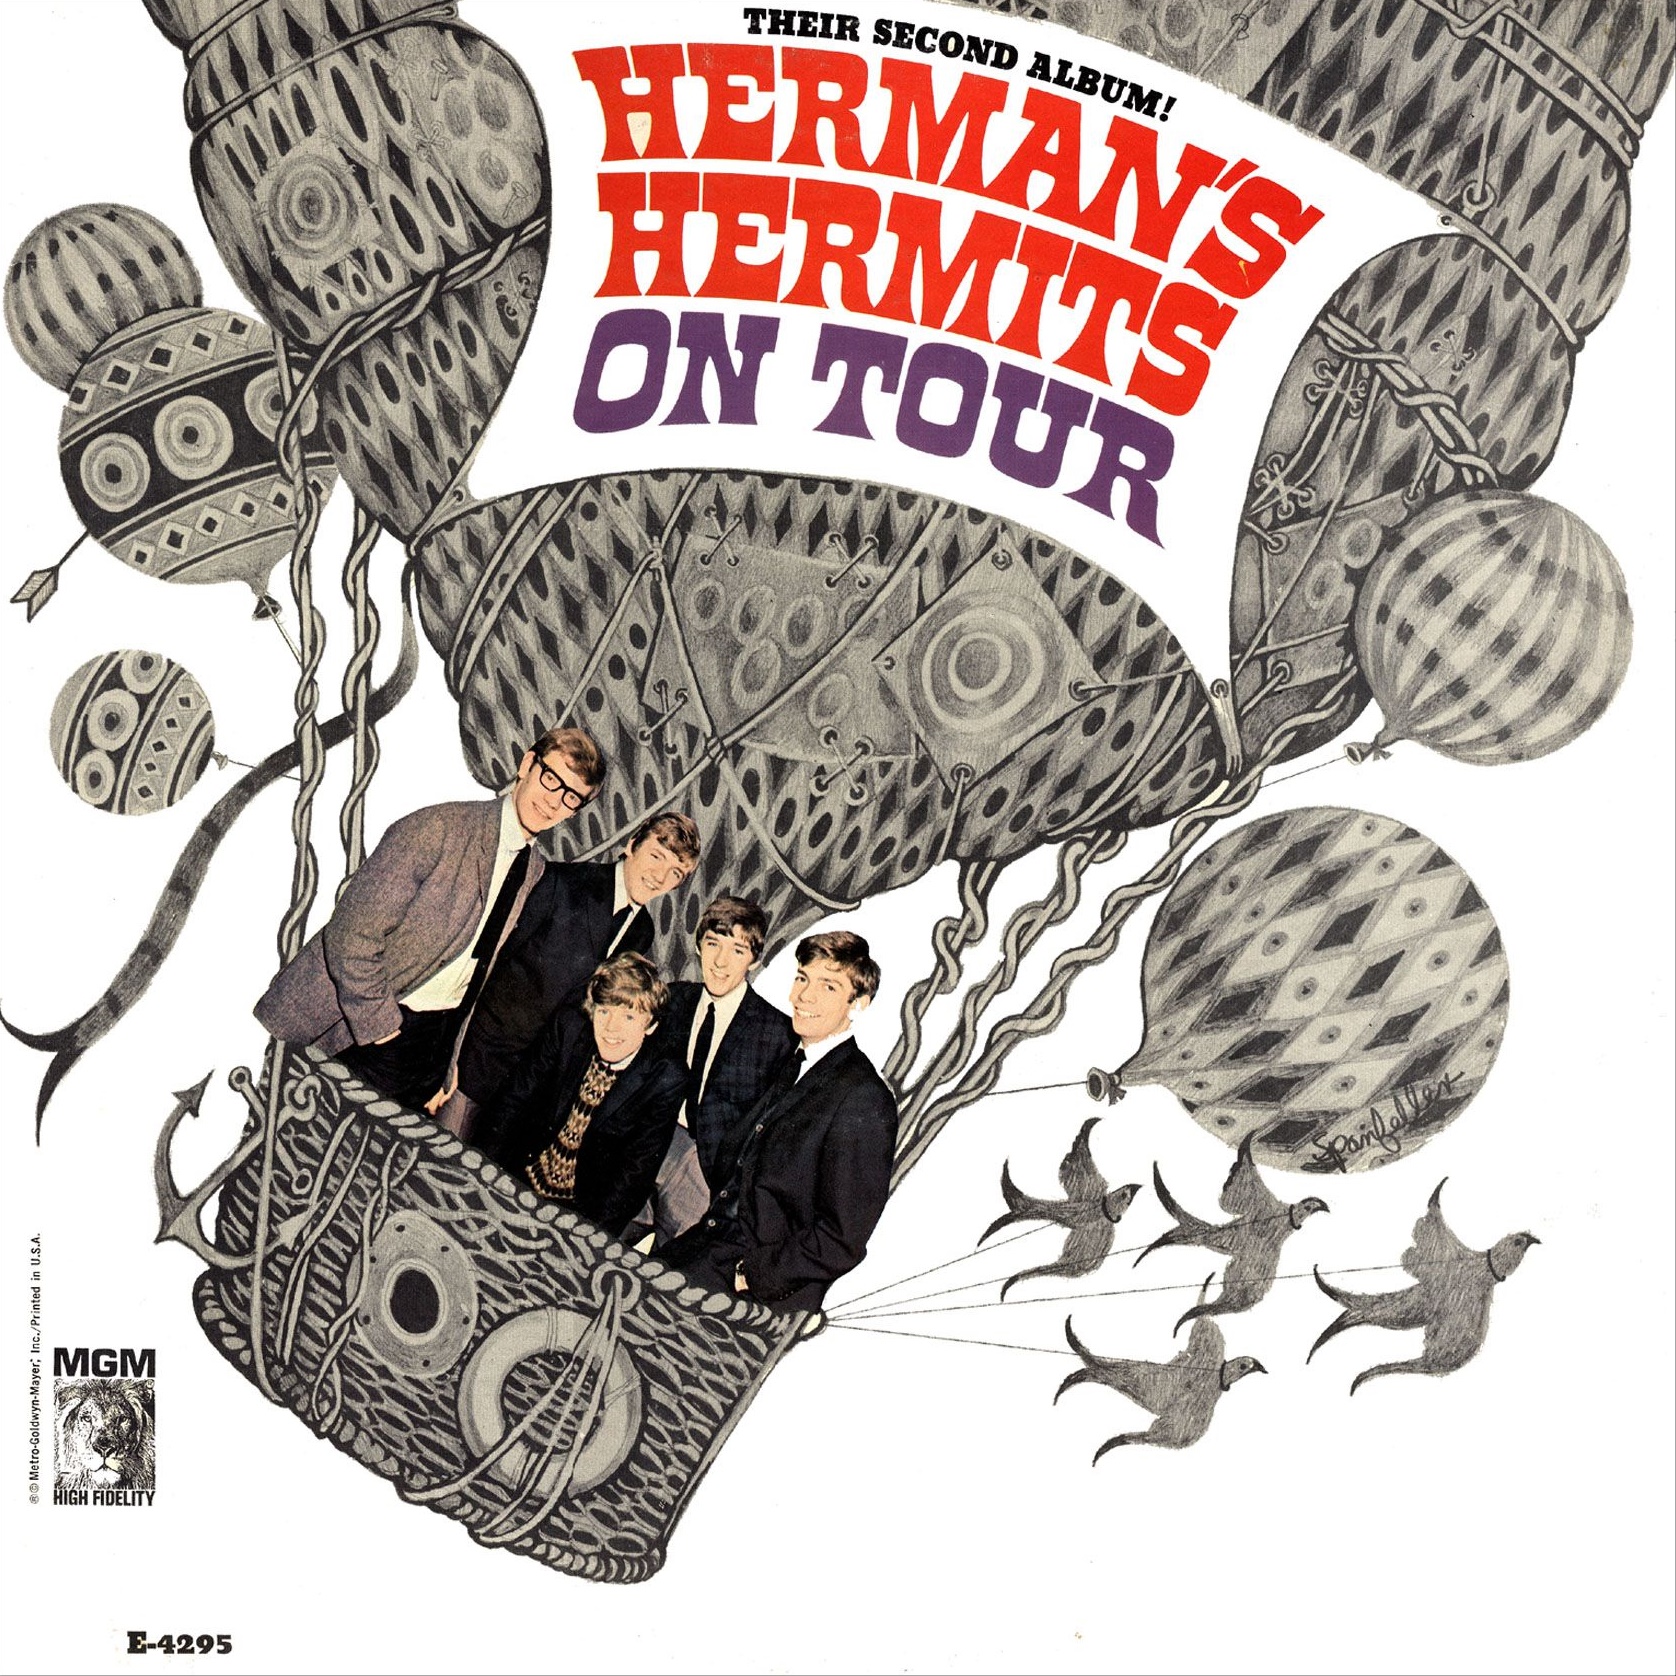 herman's hermits tour